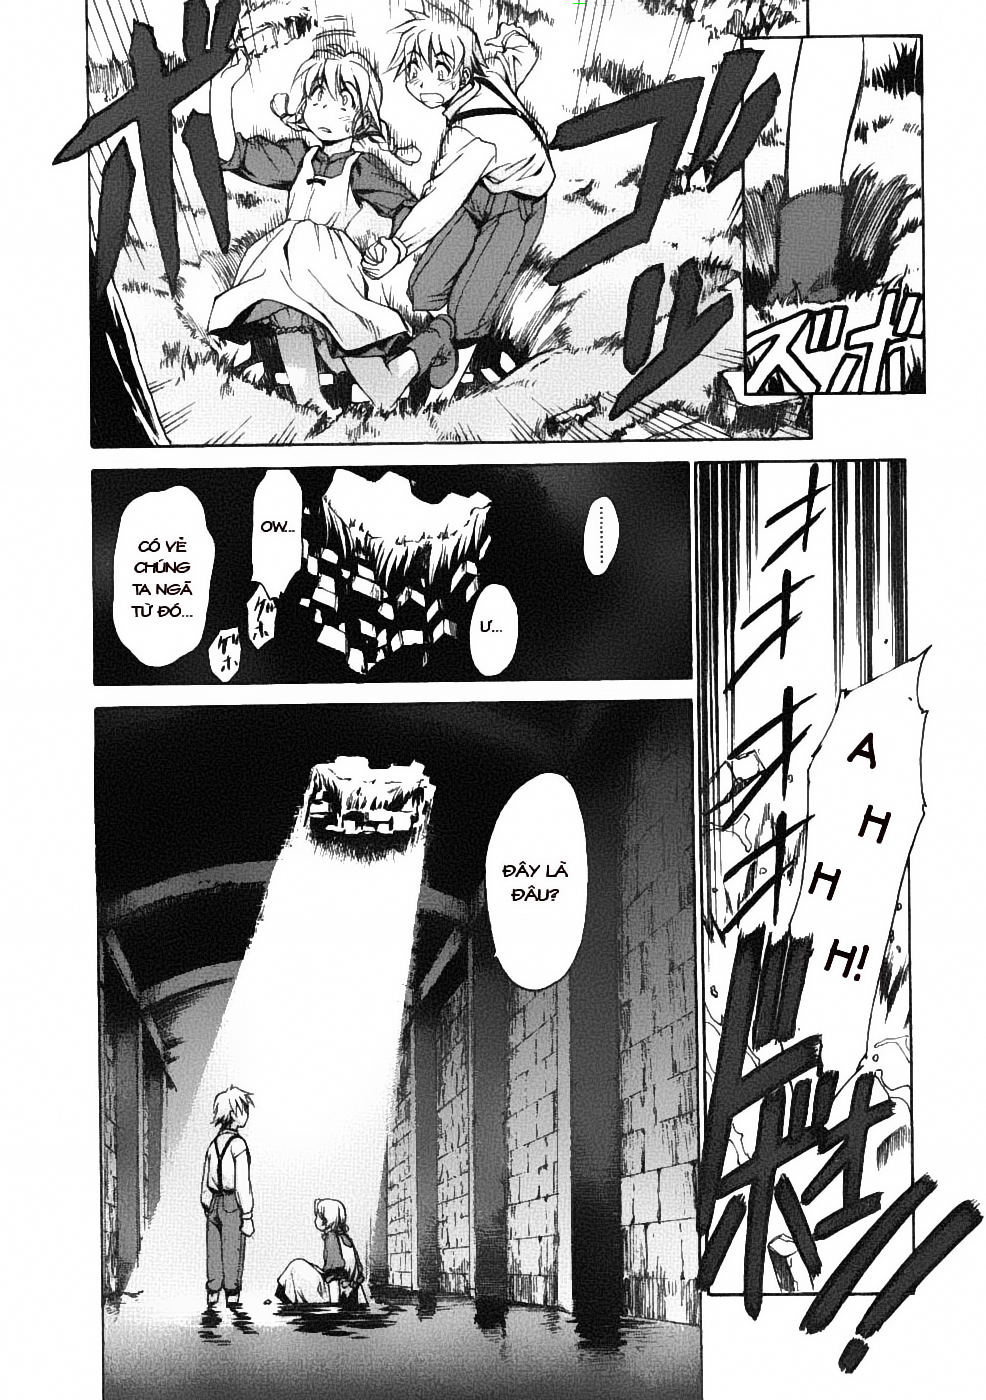 [Manga] Chrono Crusade (Đọc online tại SSF) CHRNO-CRUSADE-02-056